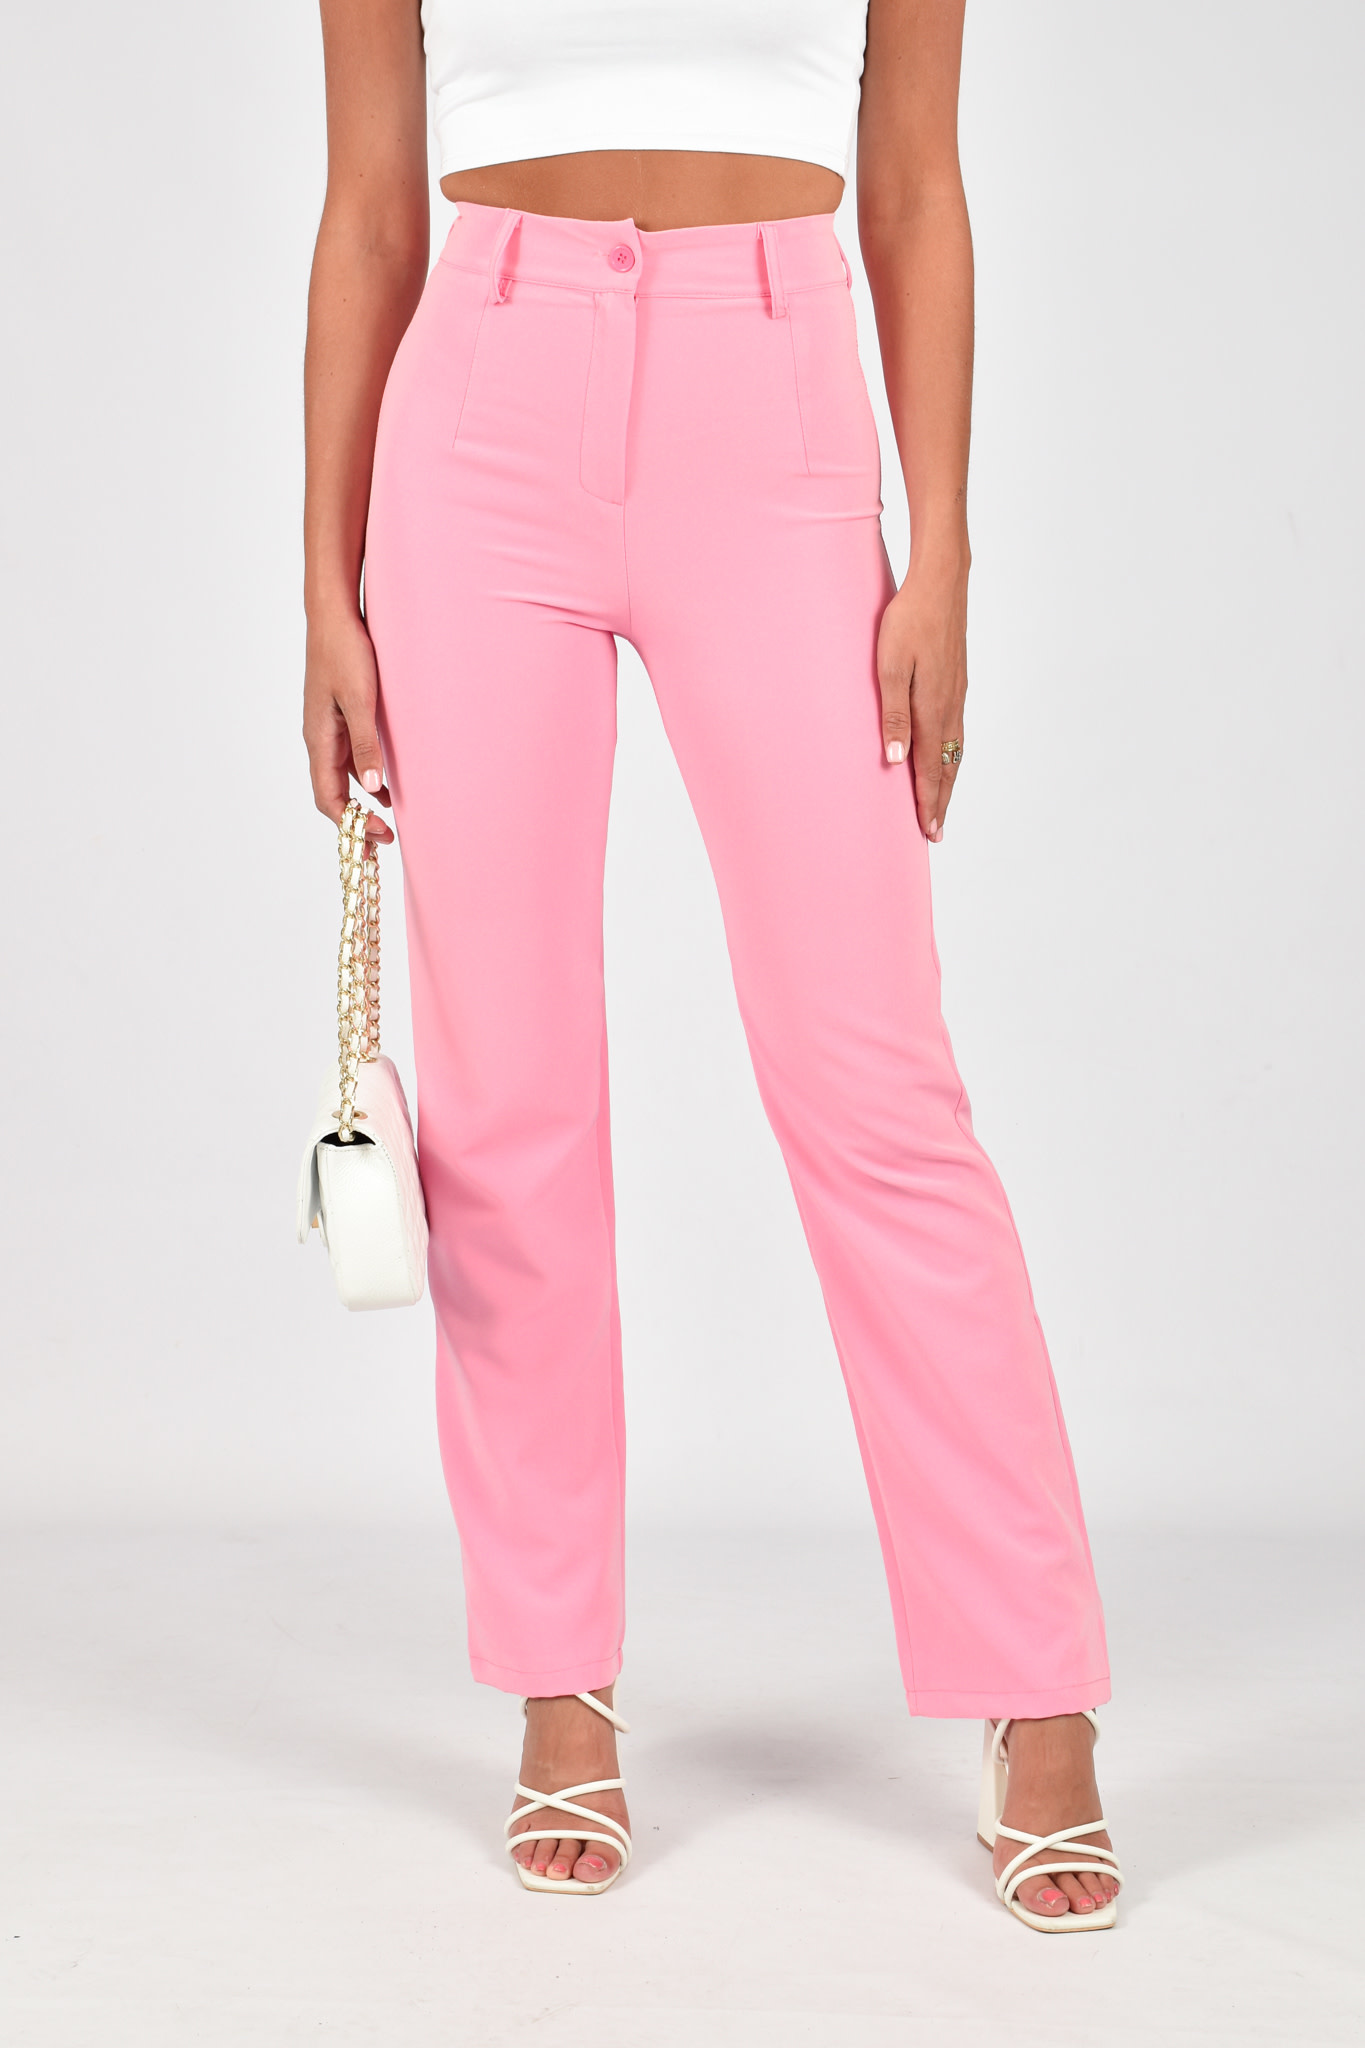 Romy pantalon pink